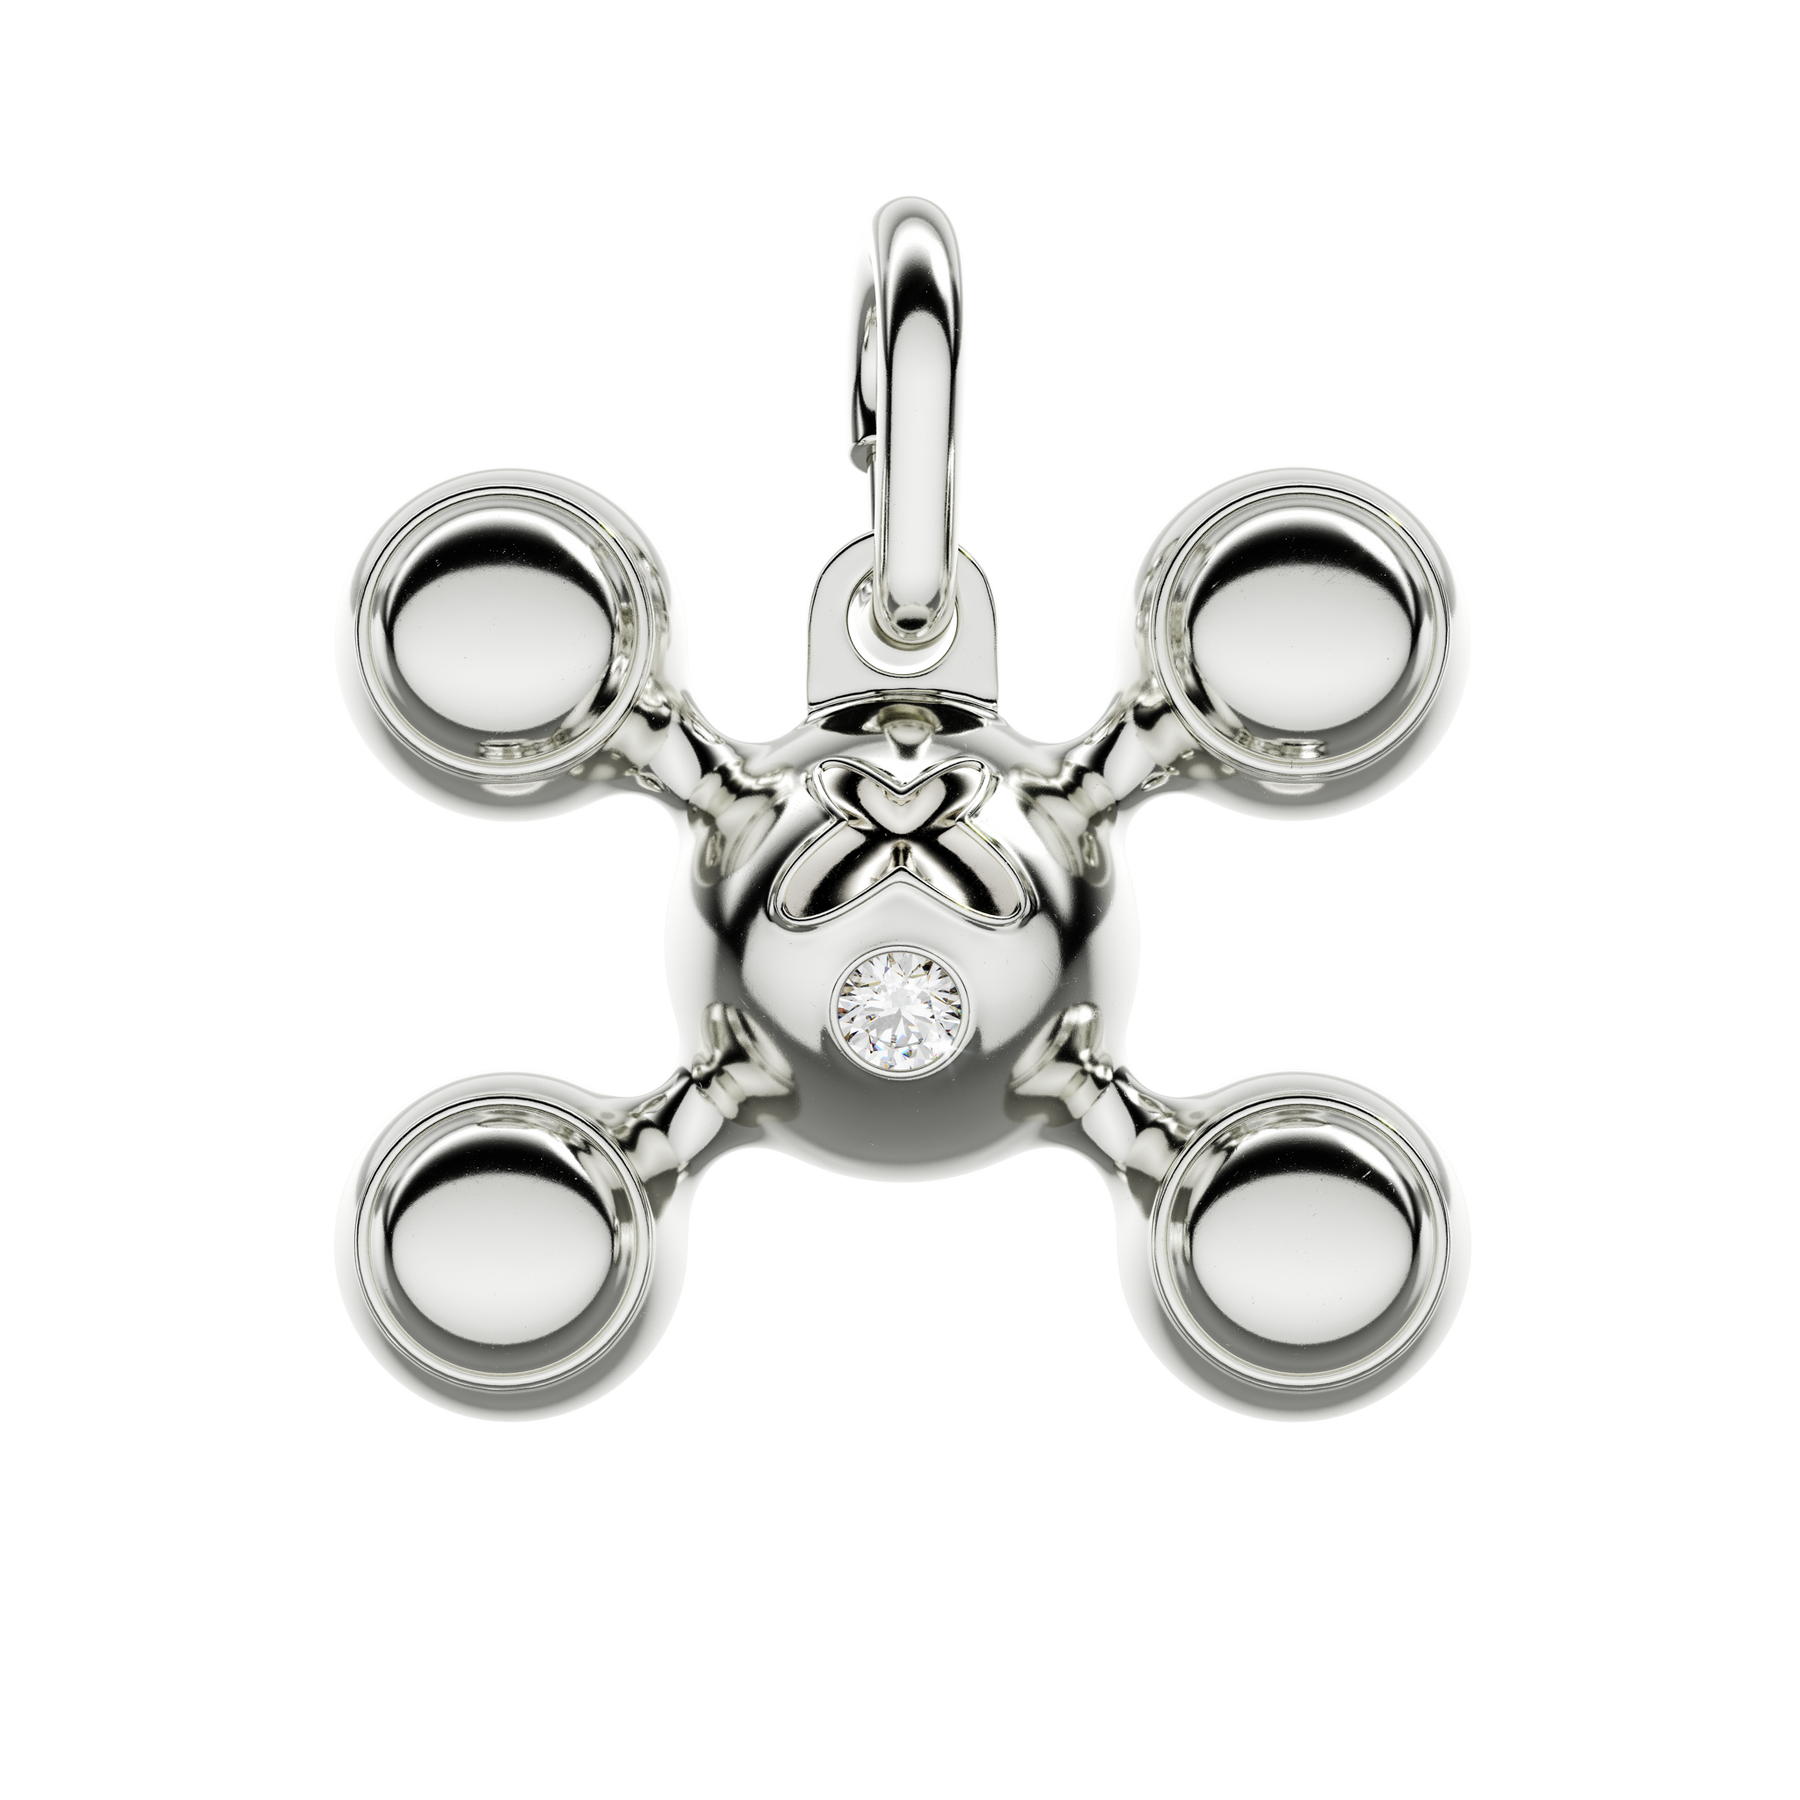 Sphere Pendant - Silver Beaded Chain 50cm